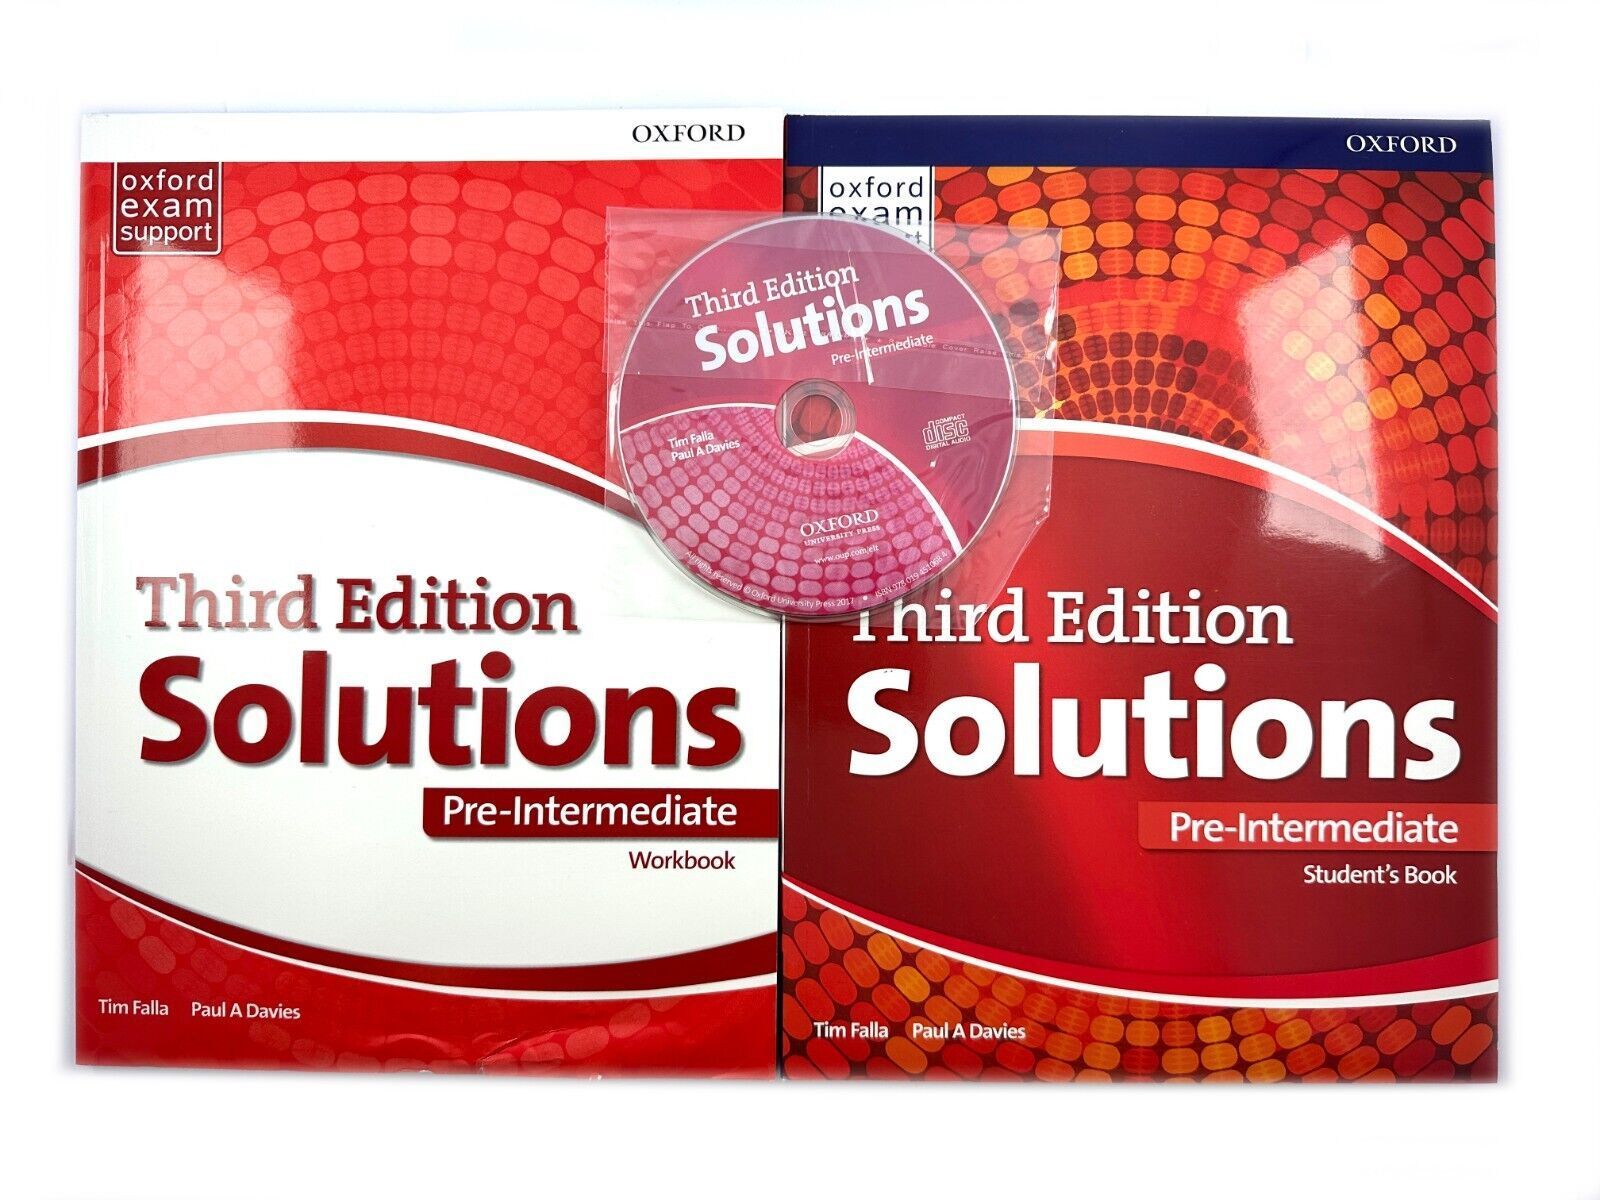 Solution pre intermediate 3rd edition workbook audio. Solutions pre-Intermediate 3rd. Solutions pre Intermediate 3rd Edition Audio. Solutions pre-Intermediate 3rd Edition Workbook. Solutions Intermediate 3rd Edition.